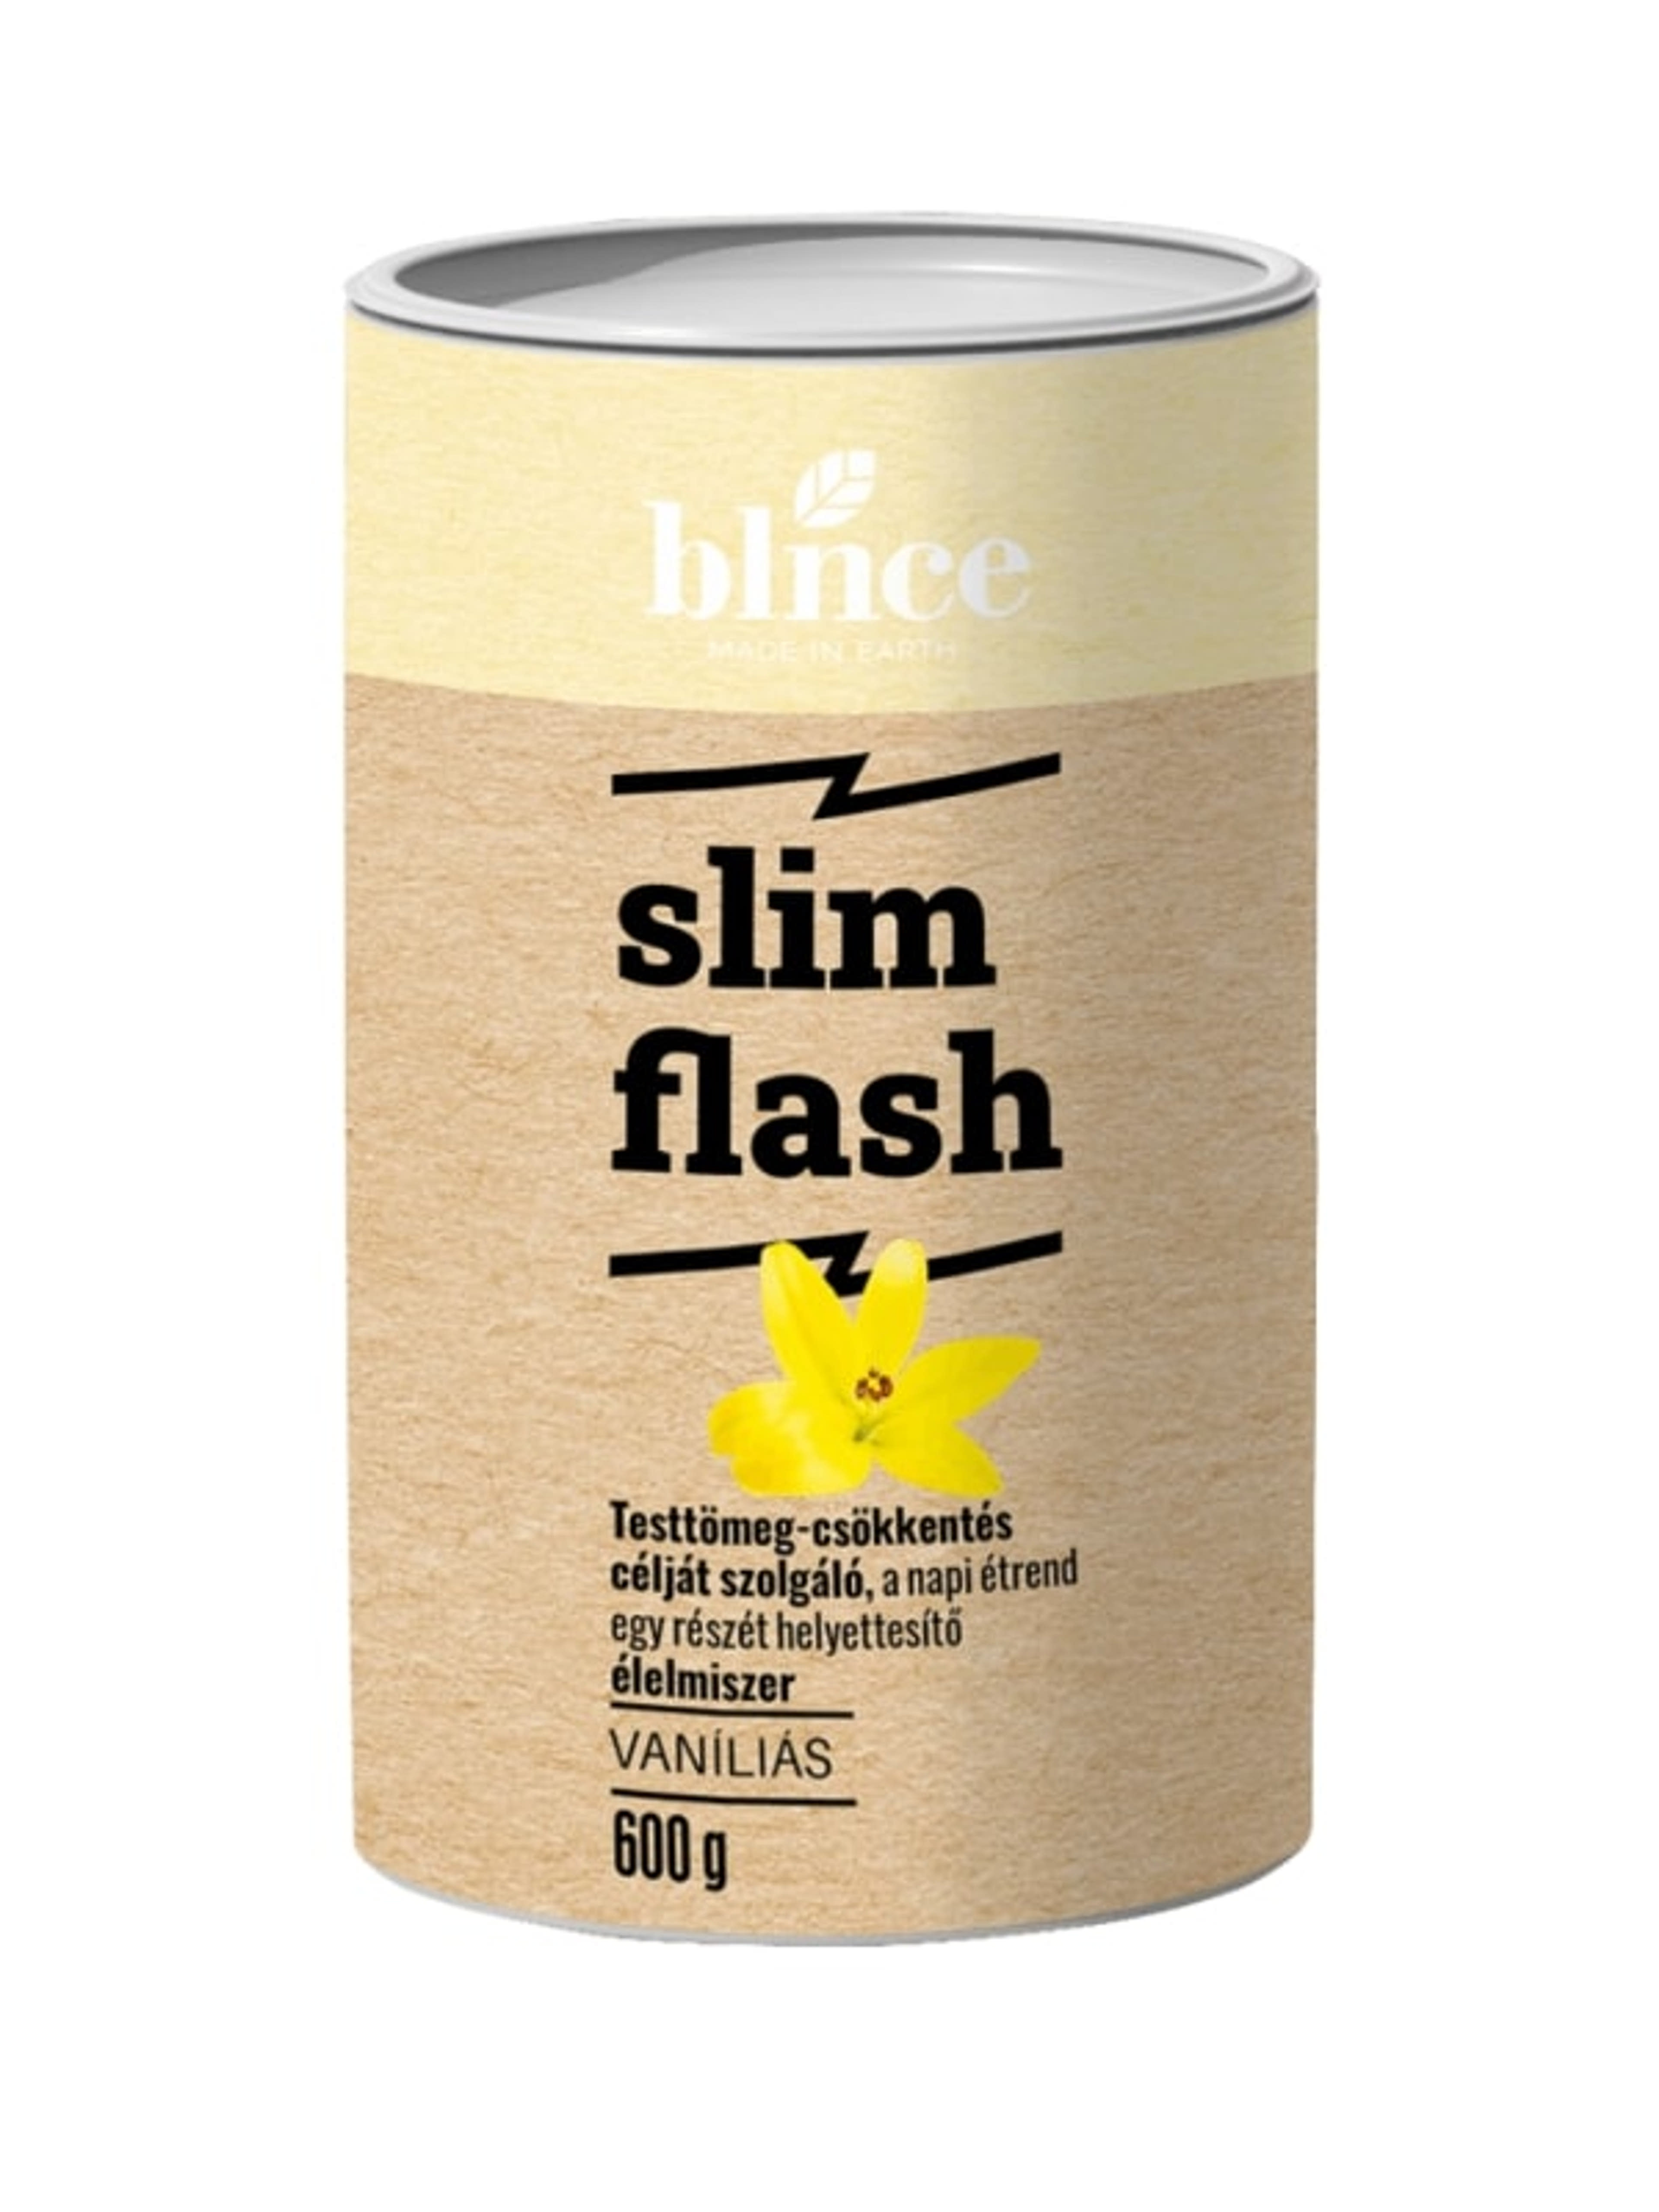 Blnce Active Slim Flash fogyókúrás italpor, vaníliás - 600 g